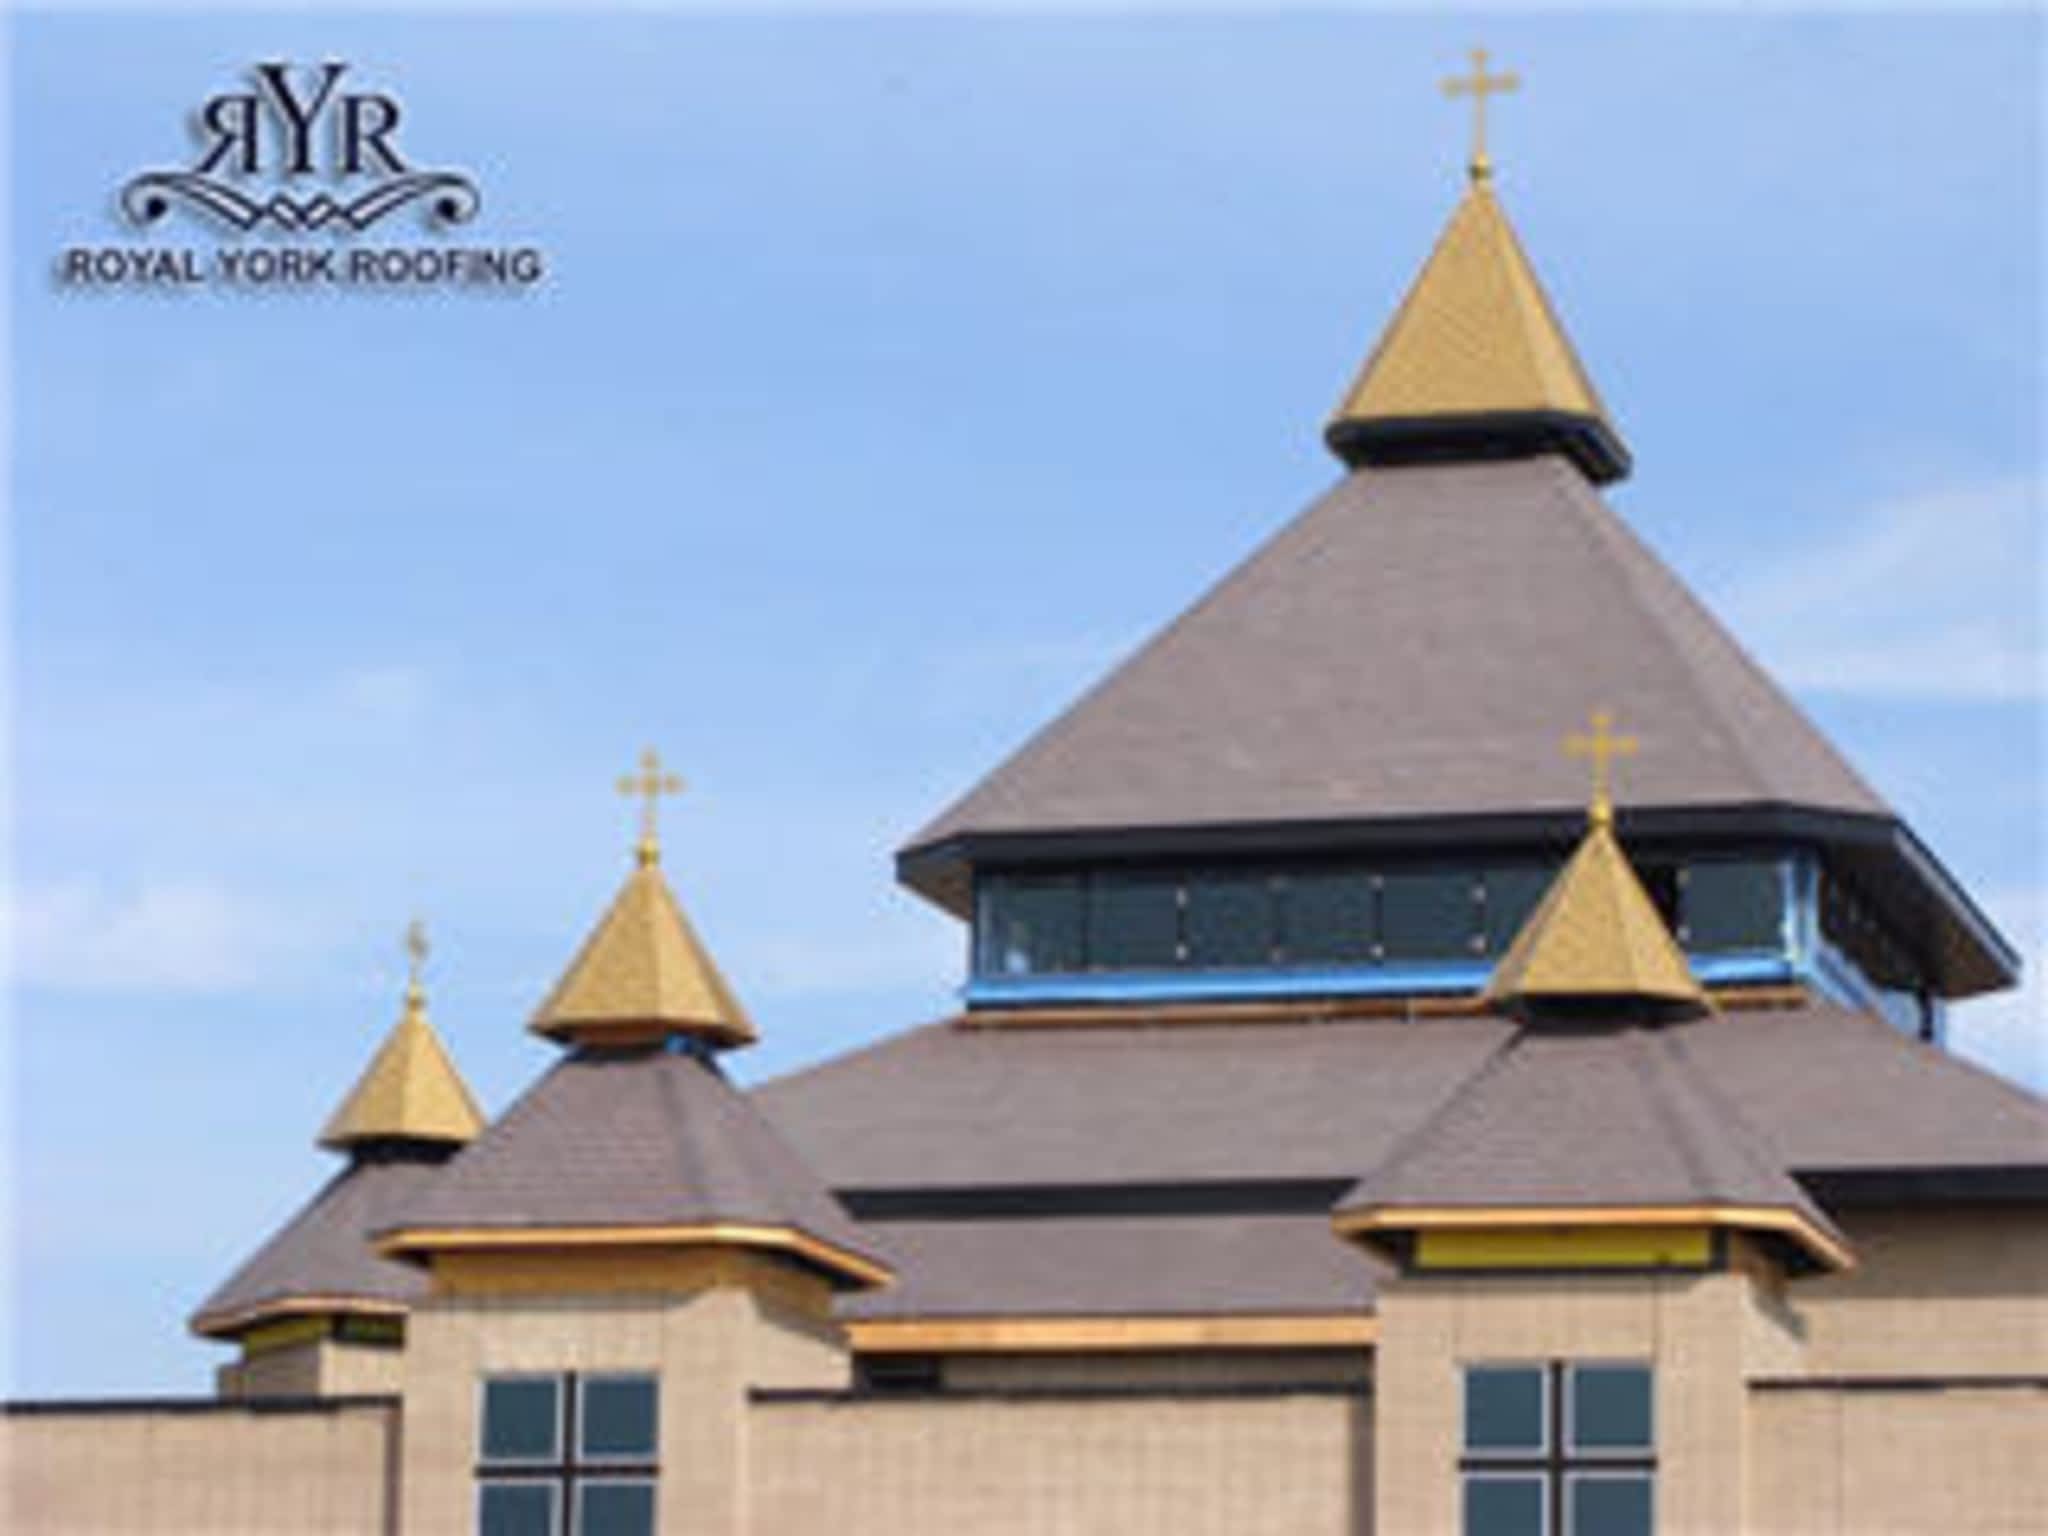 photo Royal York Roofing Ltd